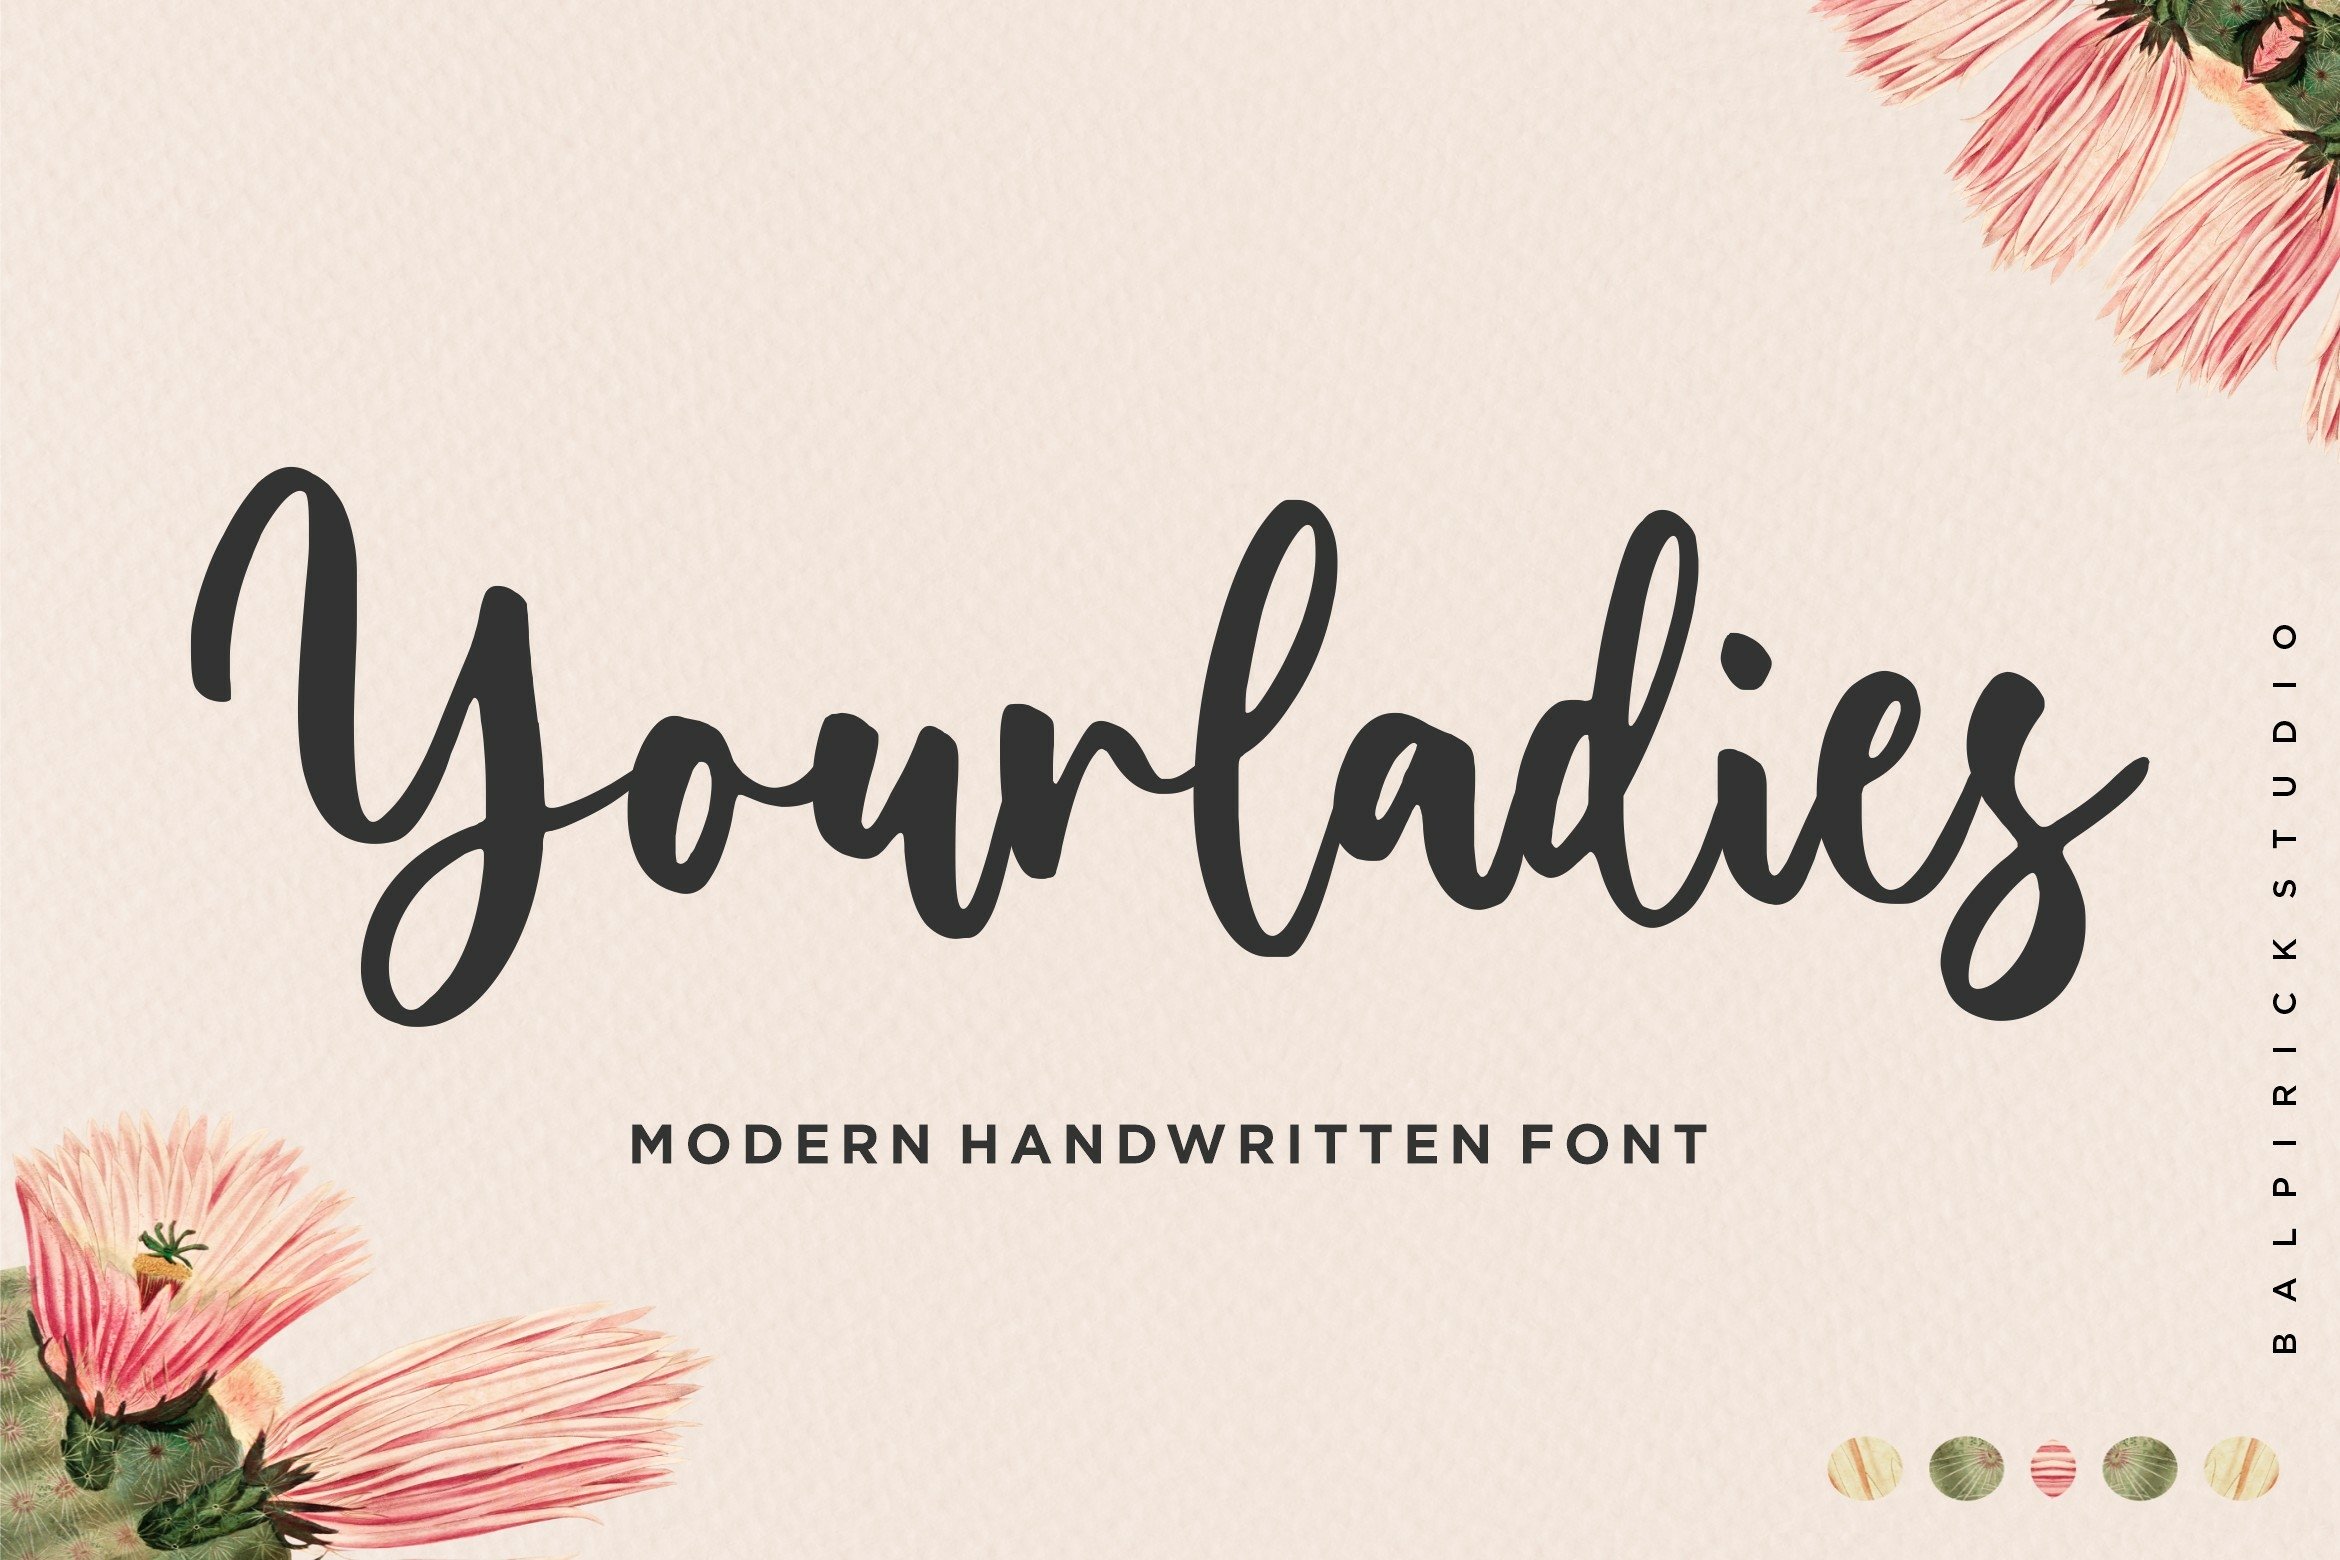 Yourladies Modern Handwritten Font1